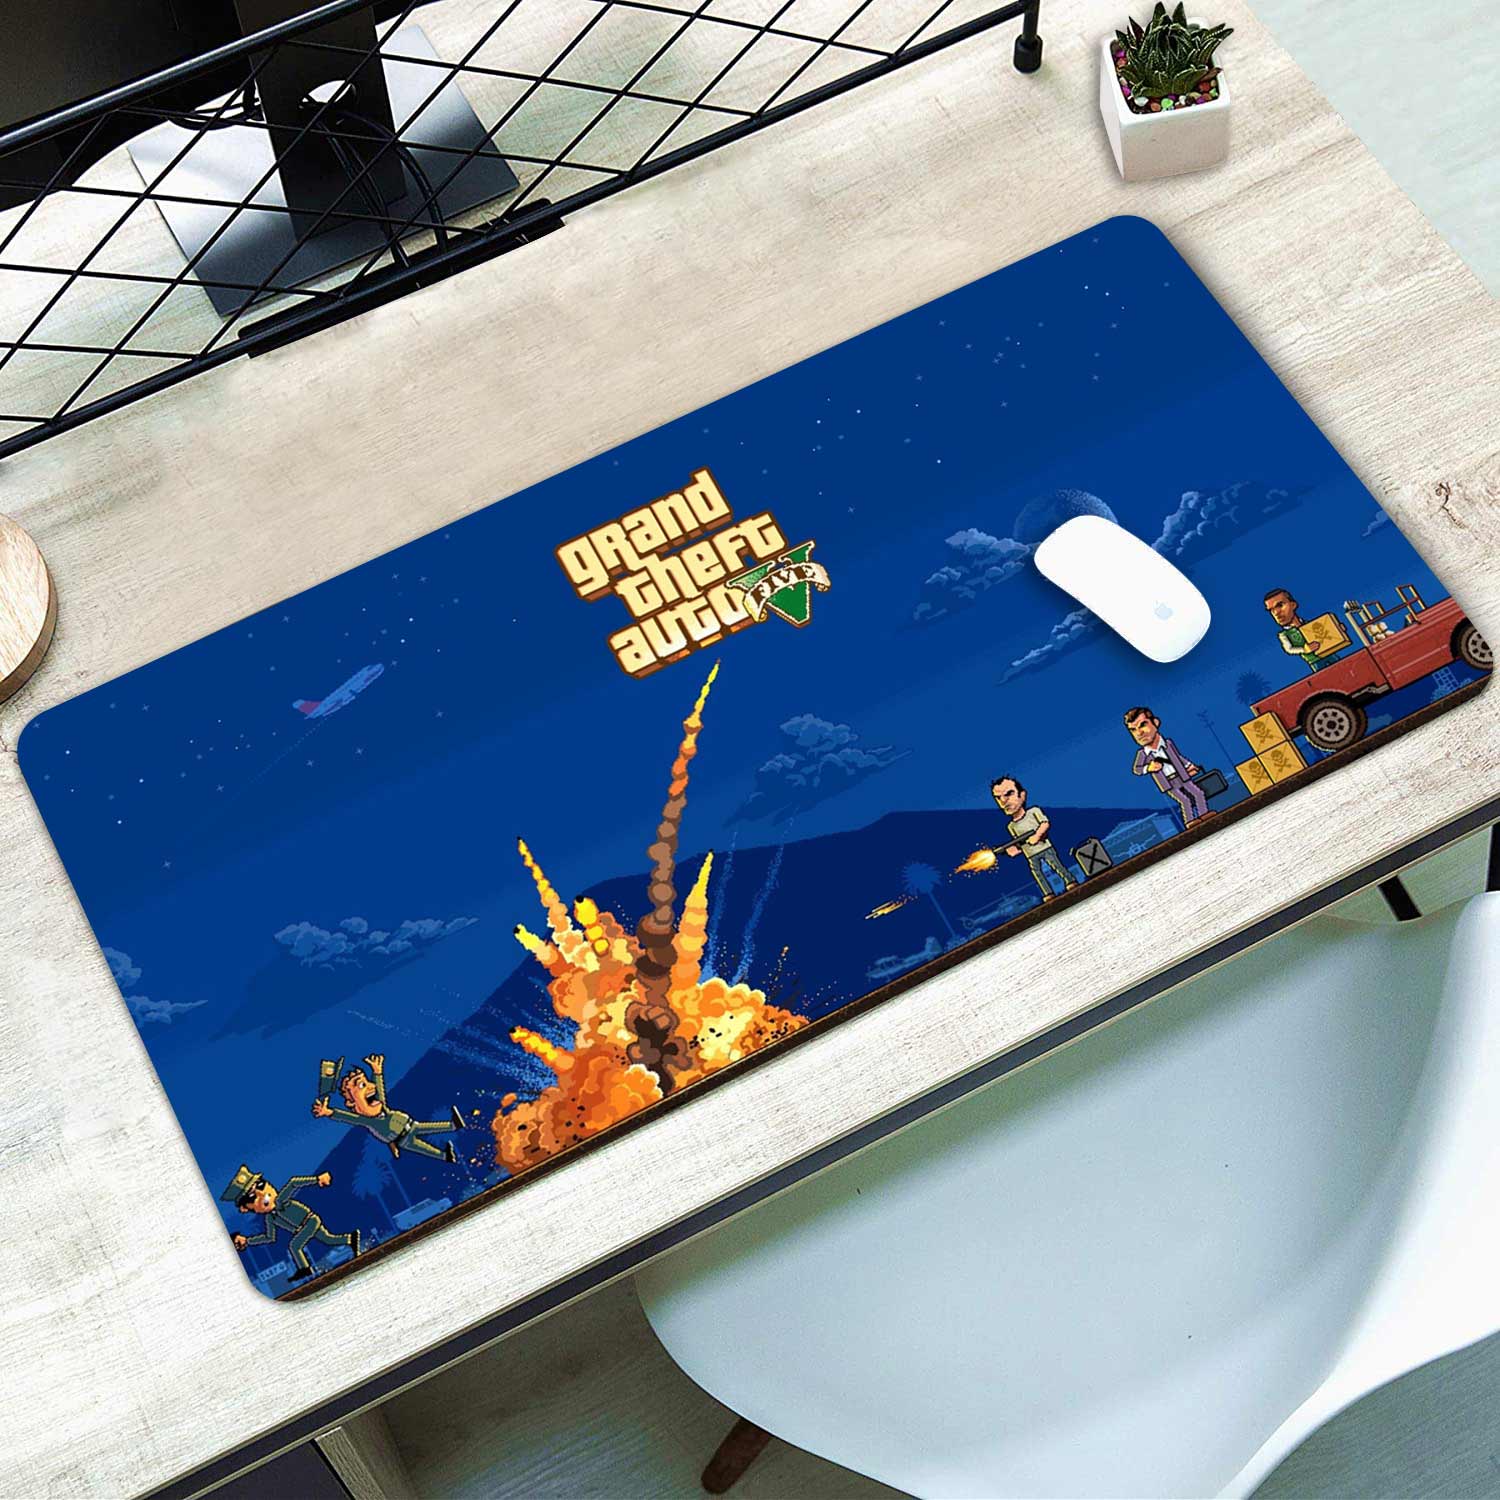 GTA Pixel Art Desk Pad